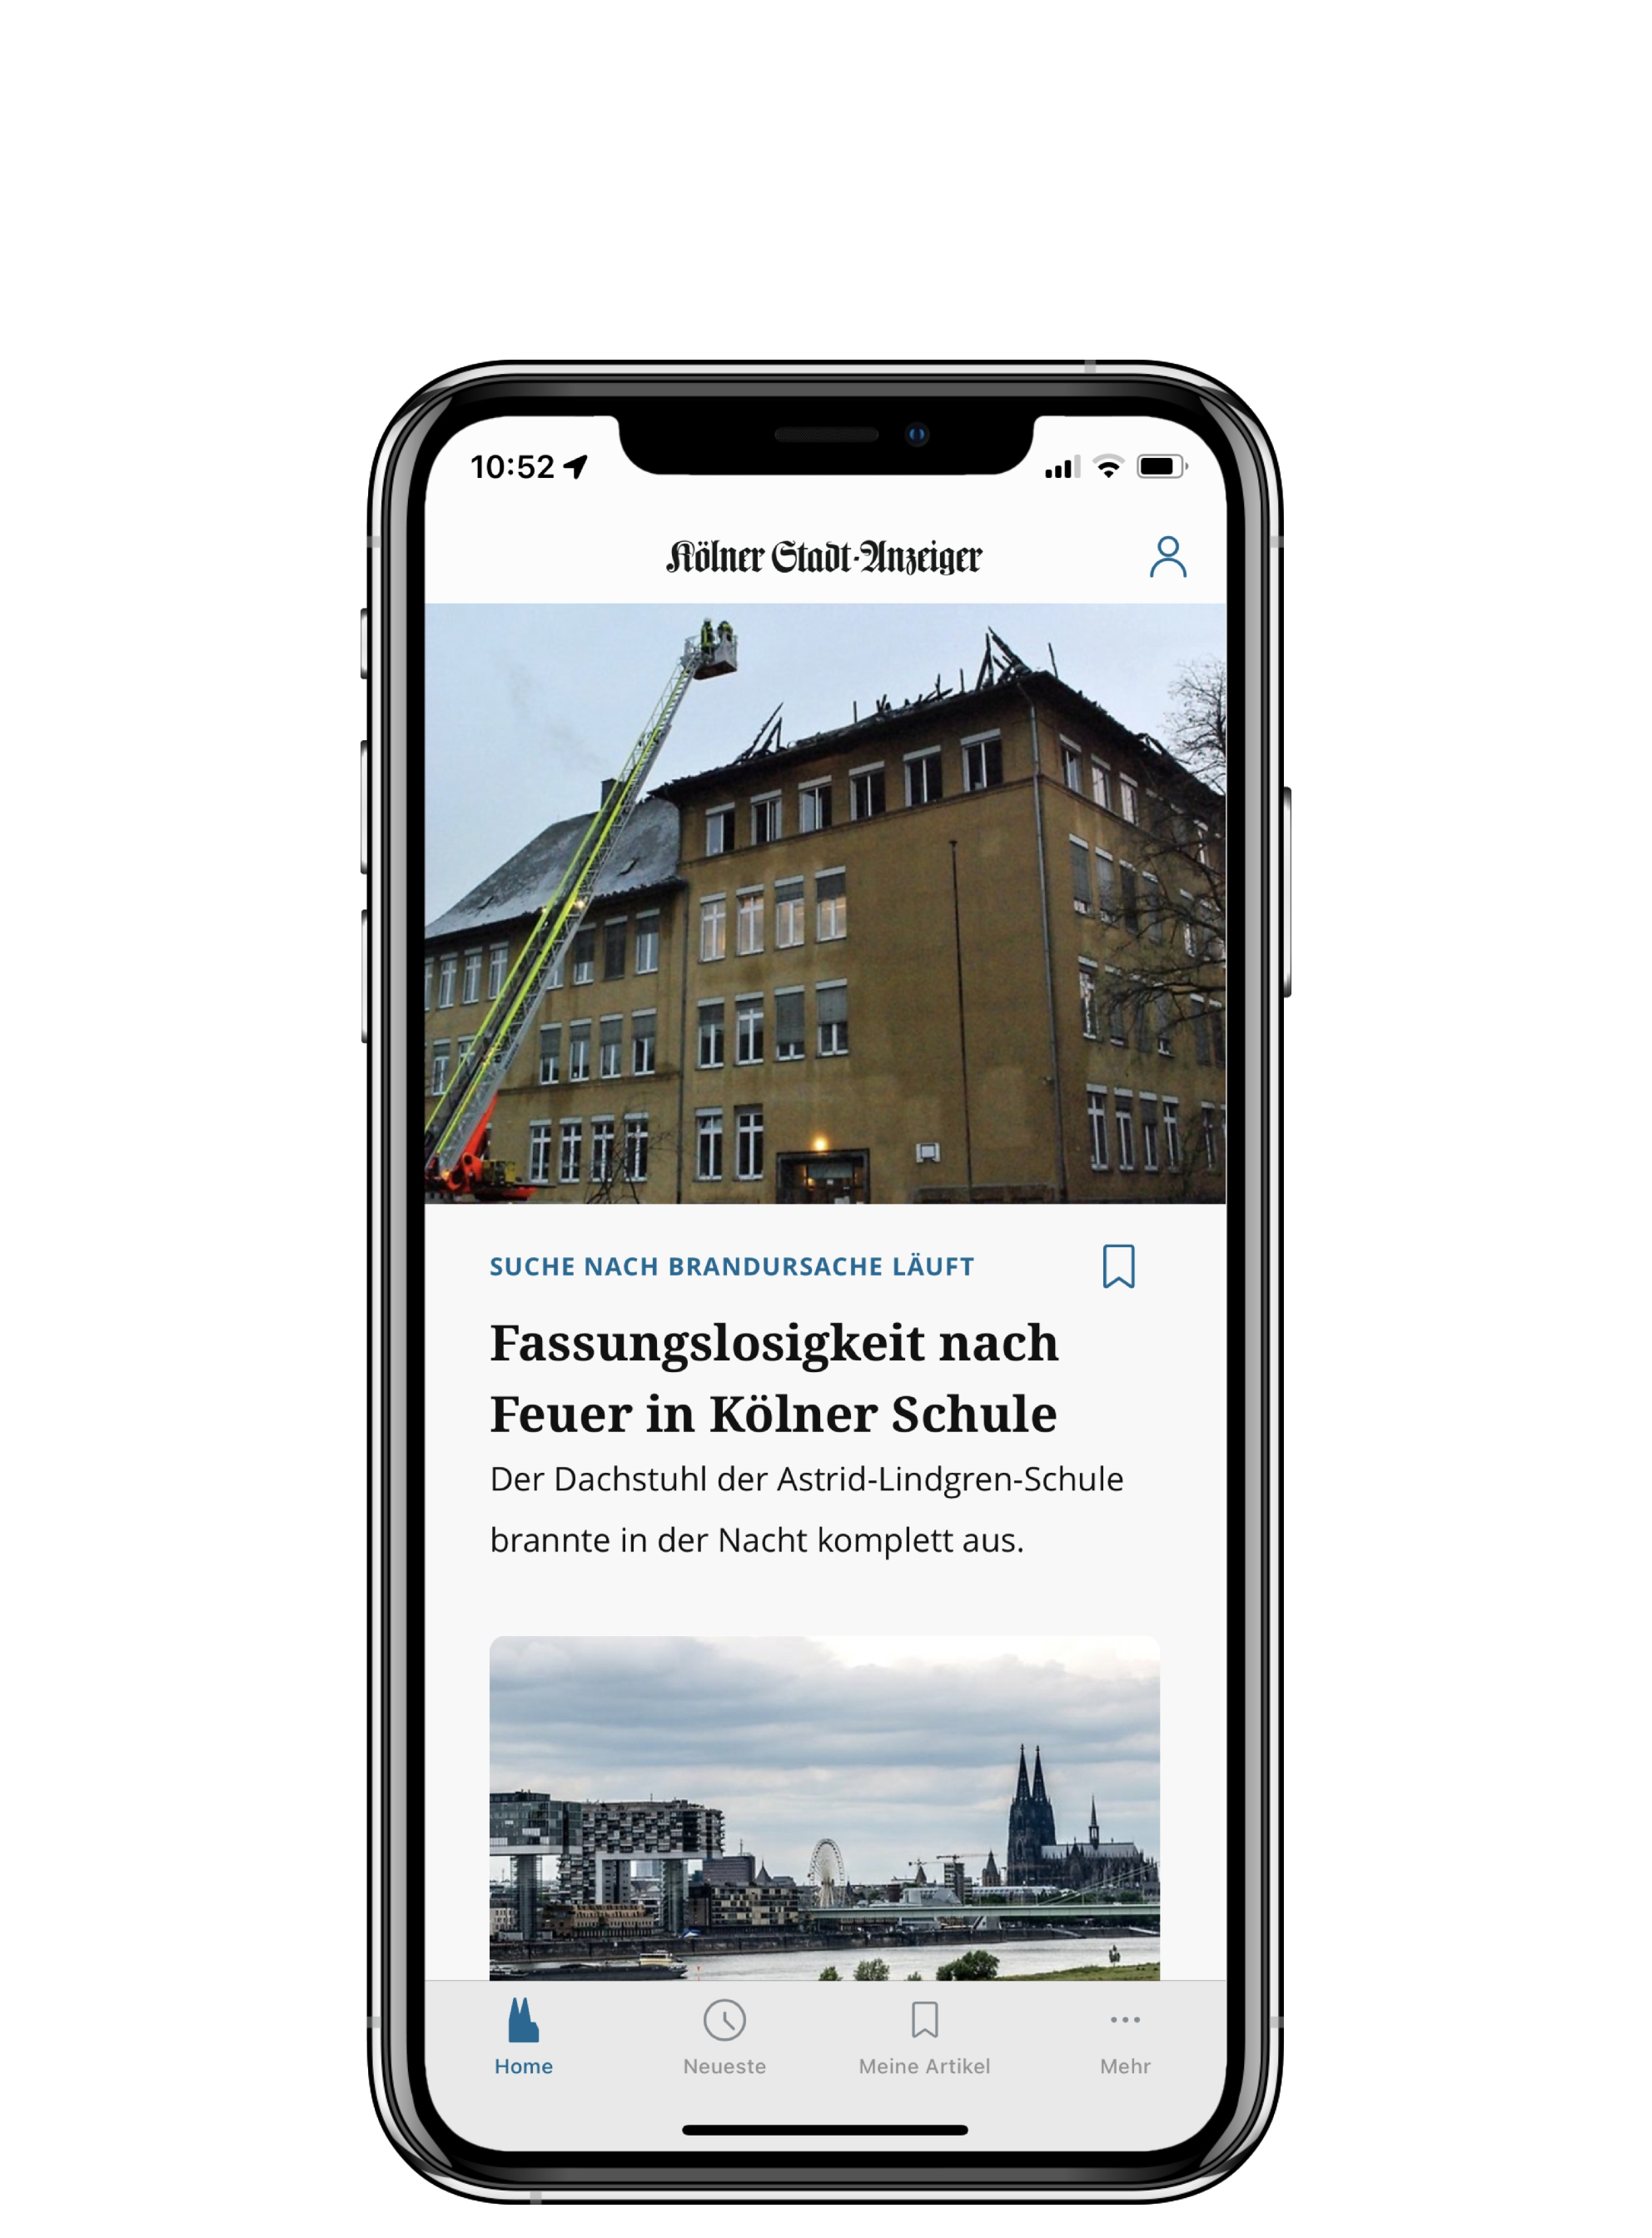 Kölner Stadt-Anzeiger launcht News-App 